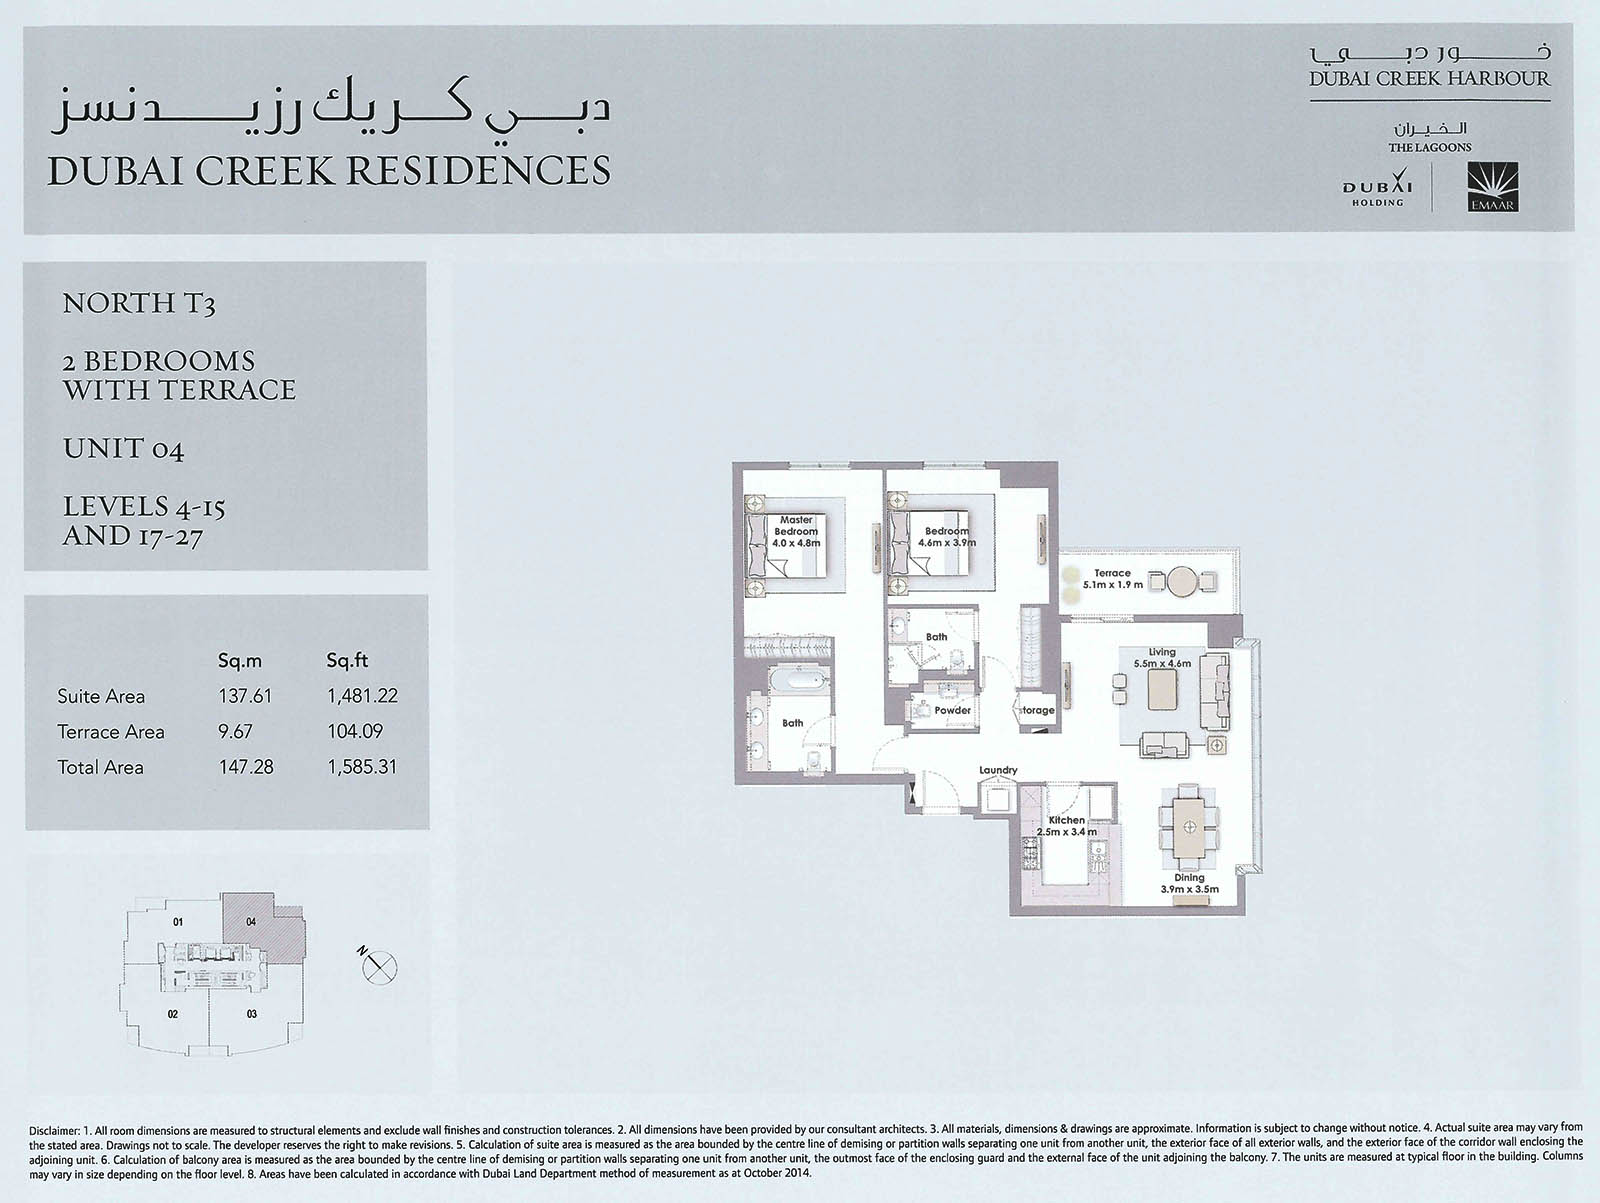 The Lagoons Dubai Creek Residence North Tower Floor Plans